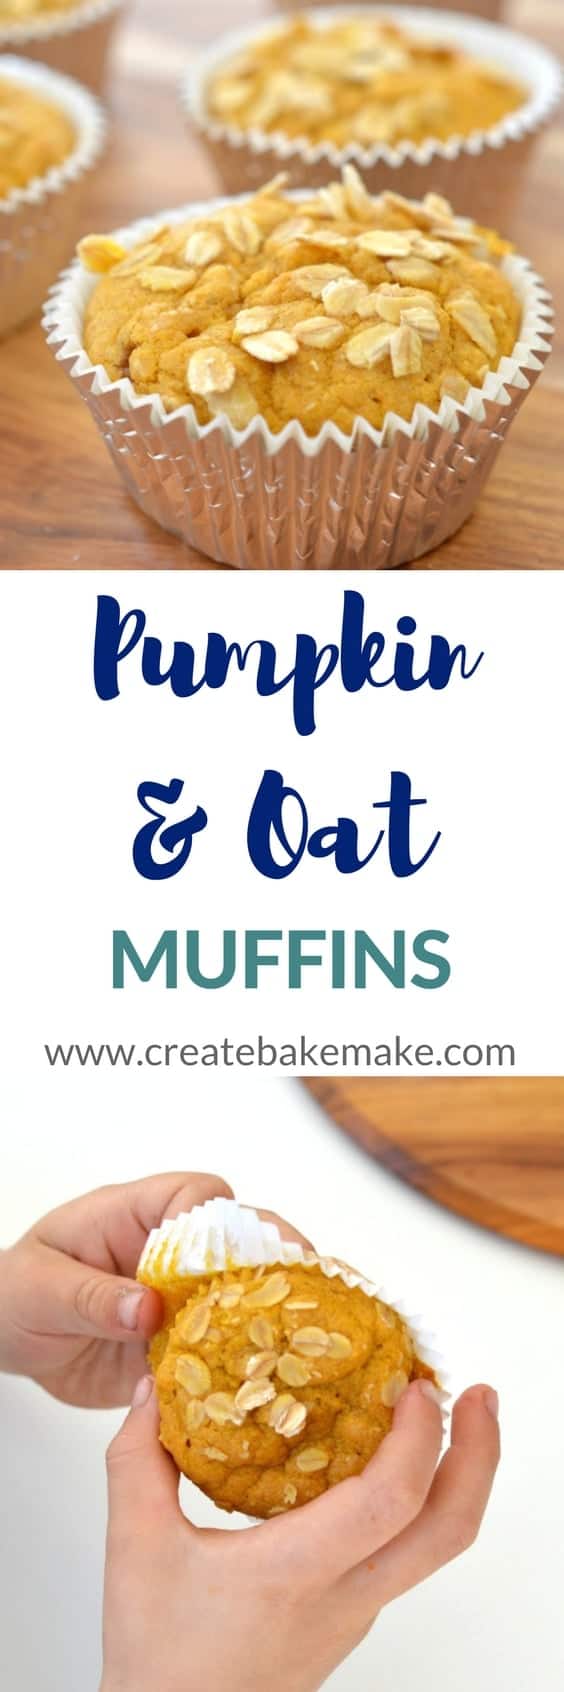 Pumpkin and Oat Muffins